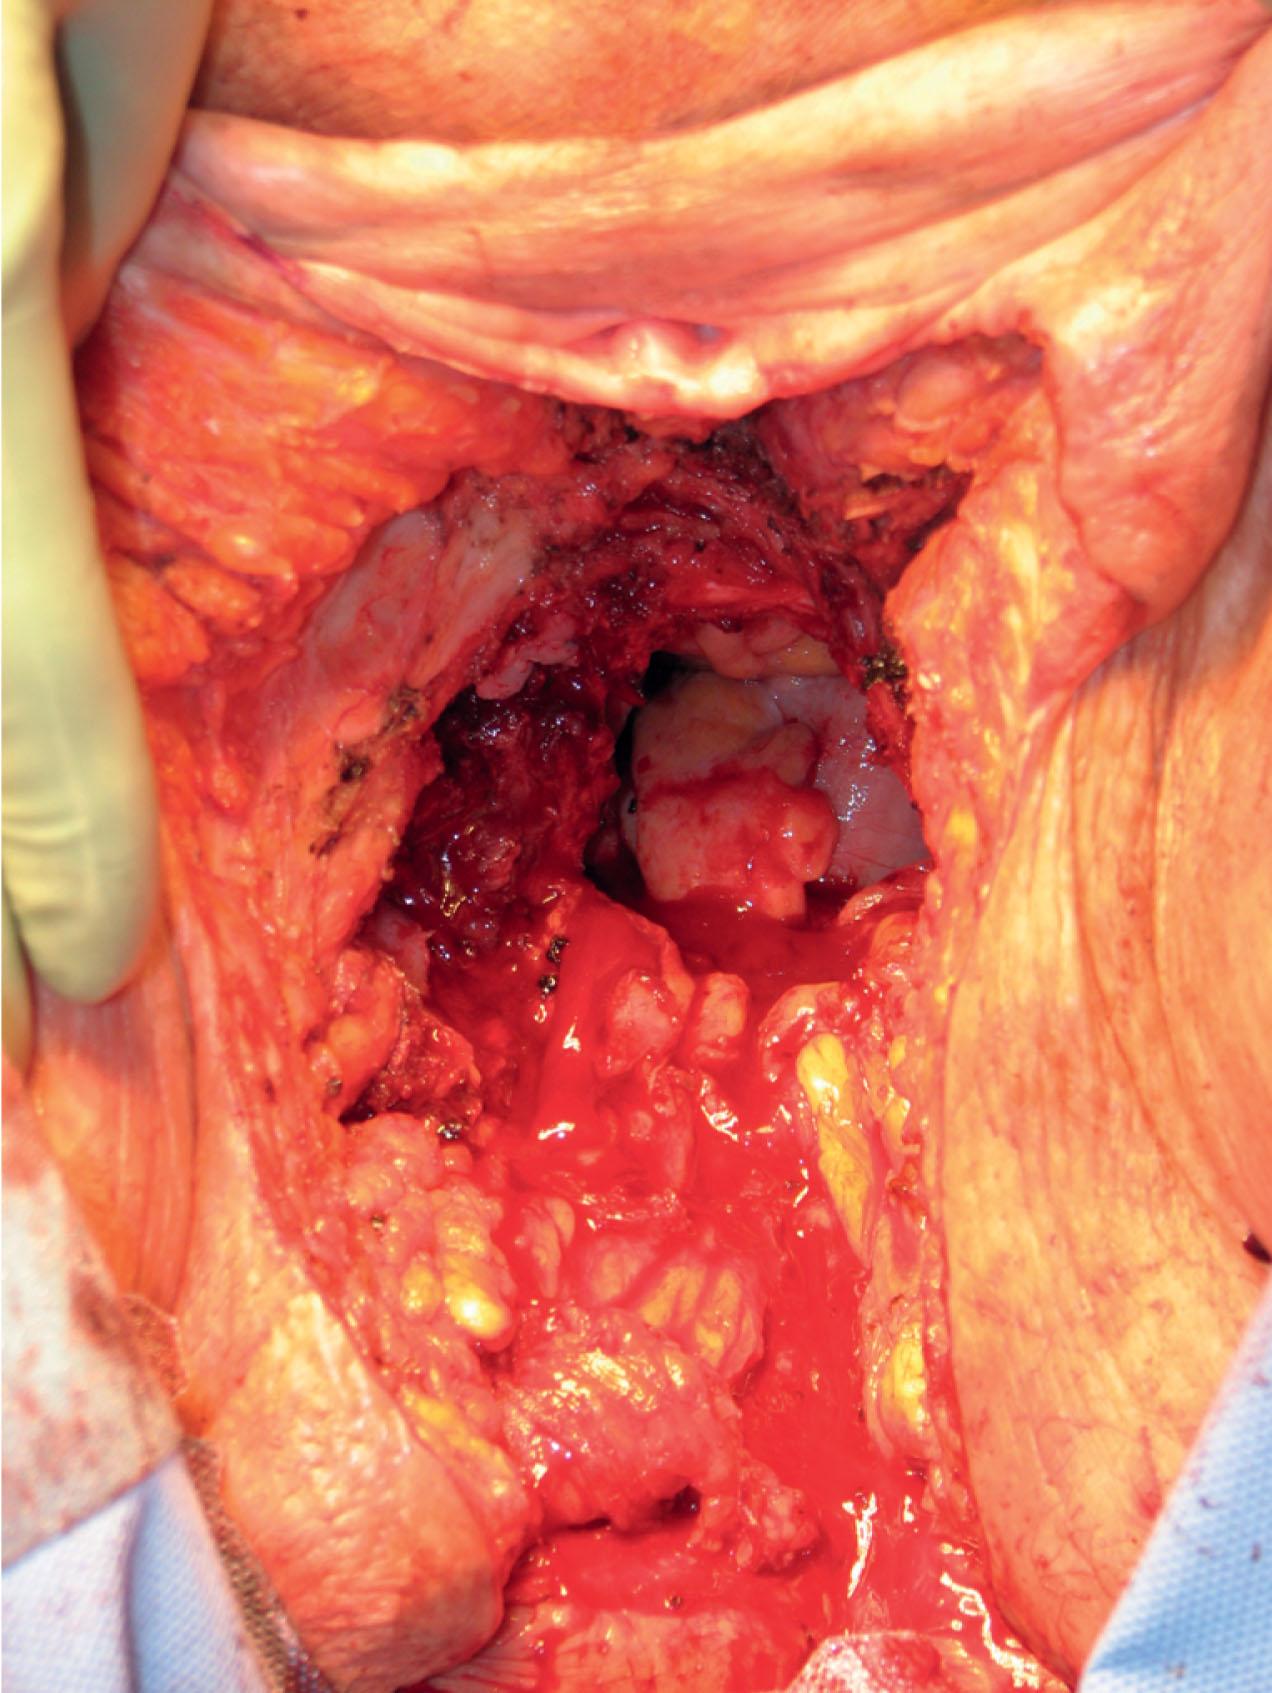 figure 17.4, Complex perineal defect involving external skin, soft tissue, vagina, and pelvic floor.